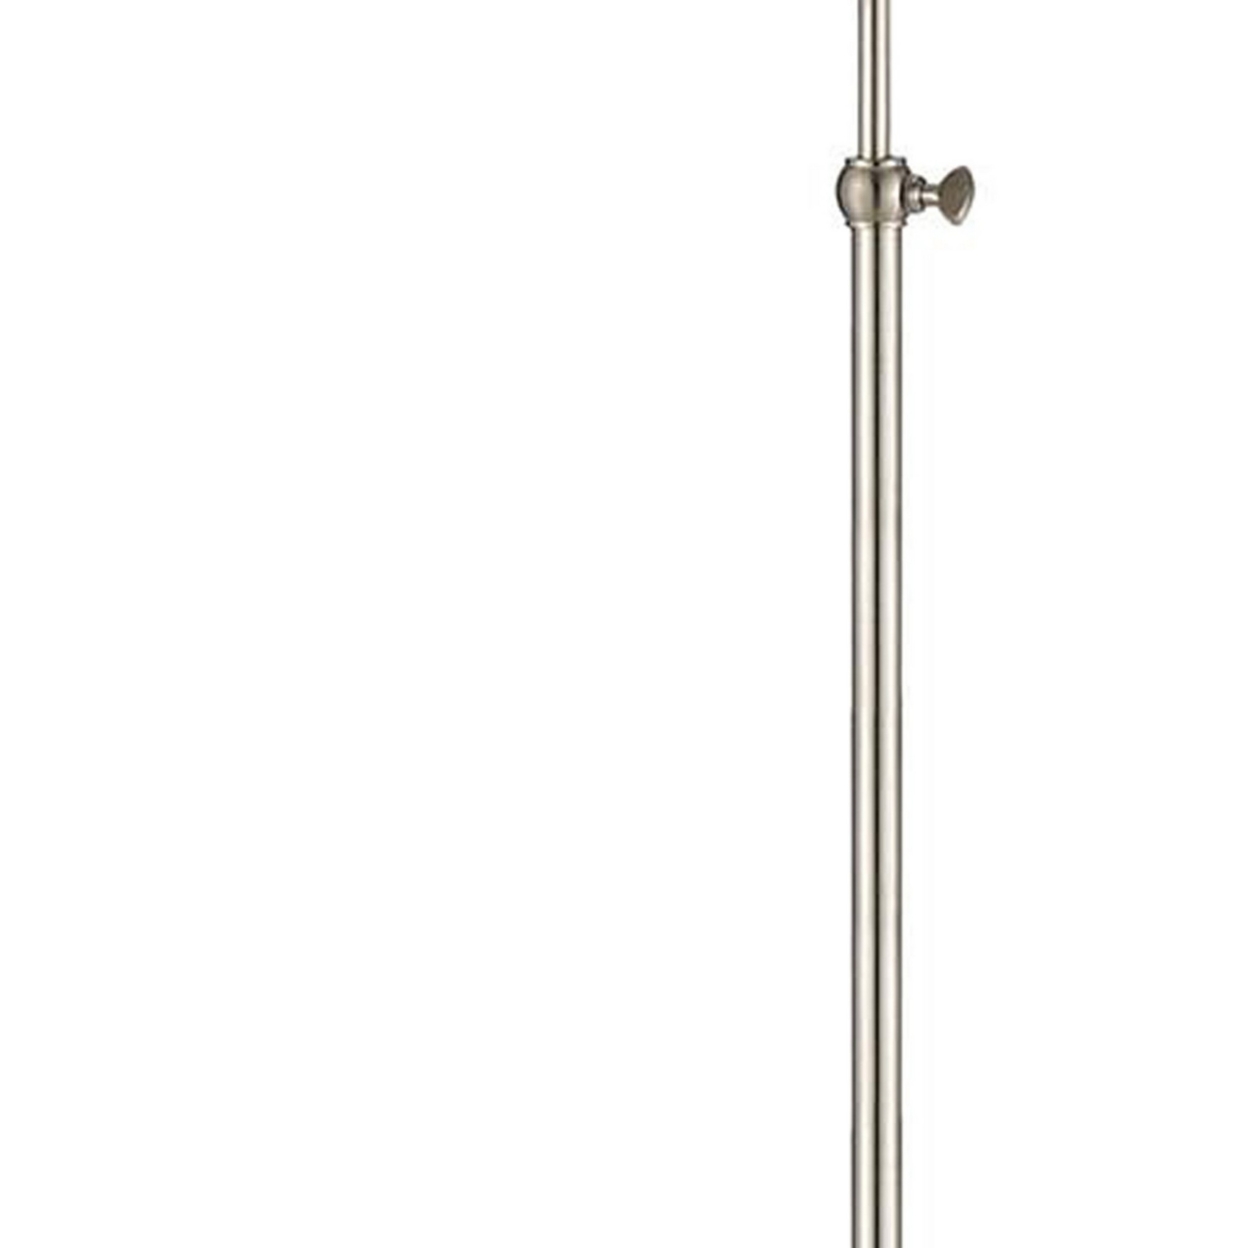 Metal Round 62 Floor Lamp With Adjustable Pole, Silver- Saltoro Sherpi